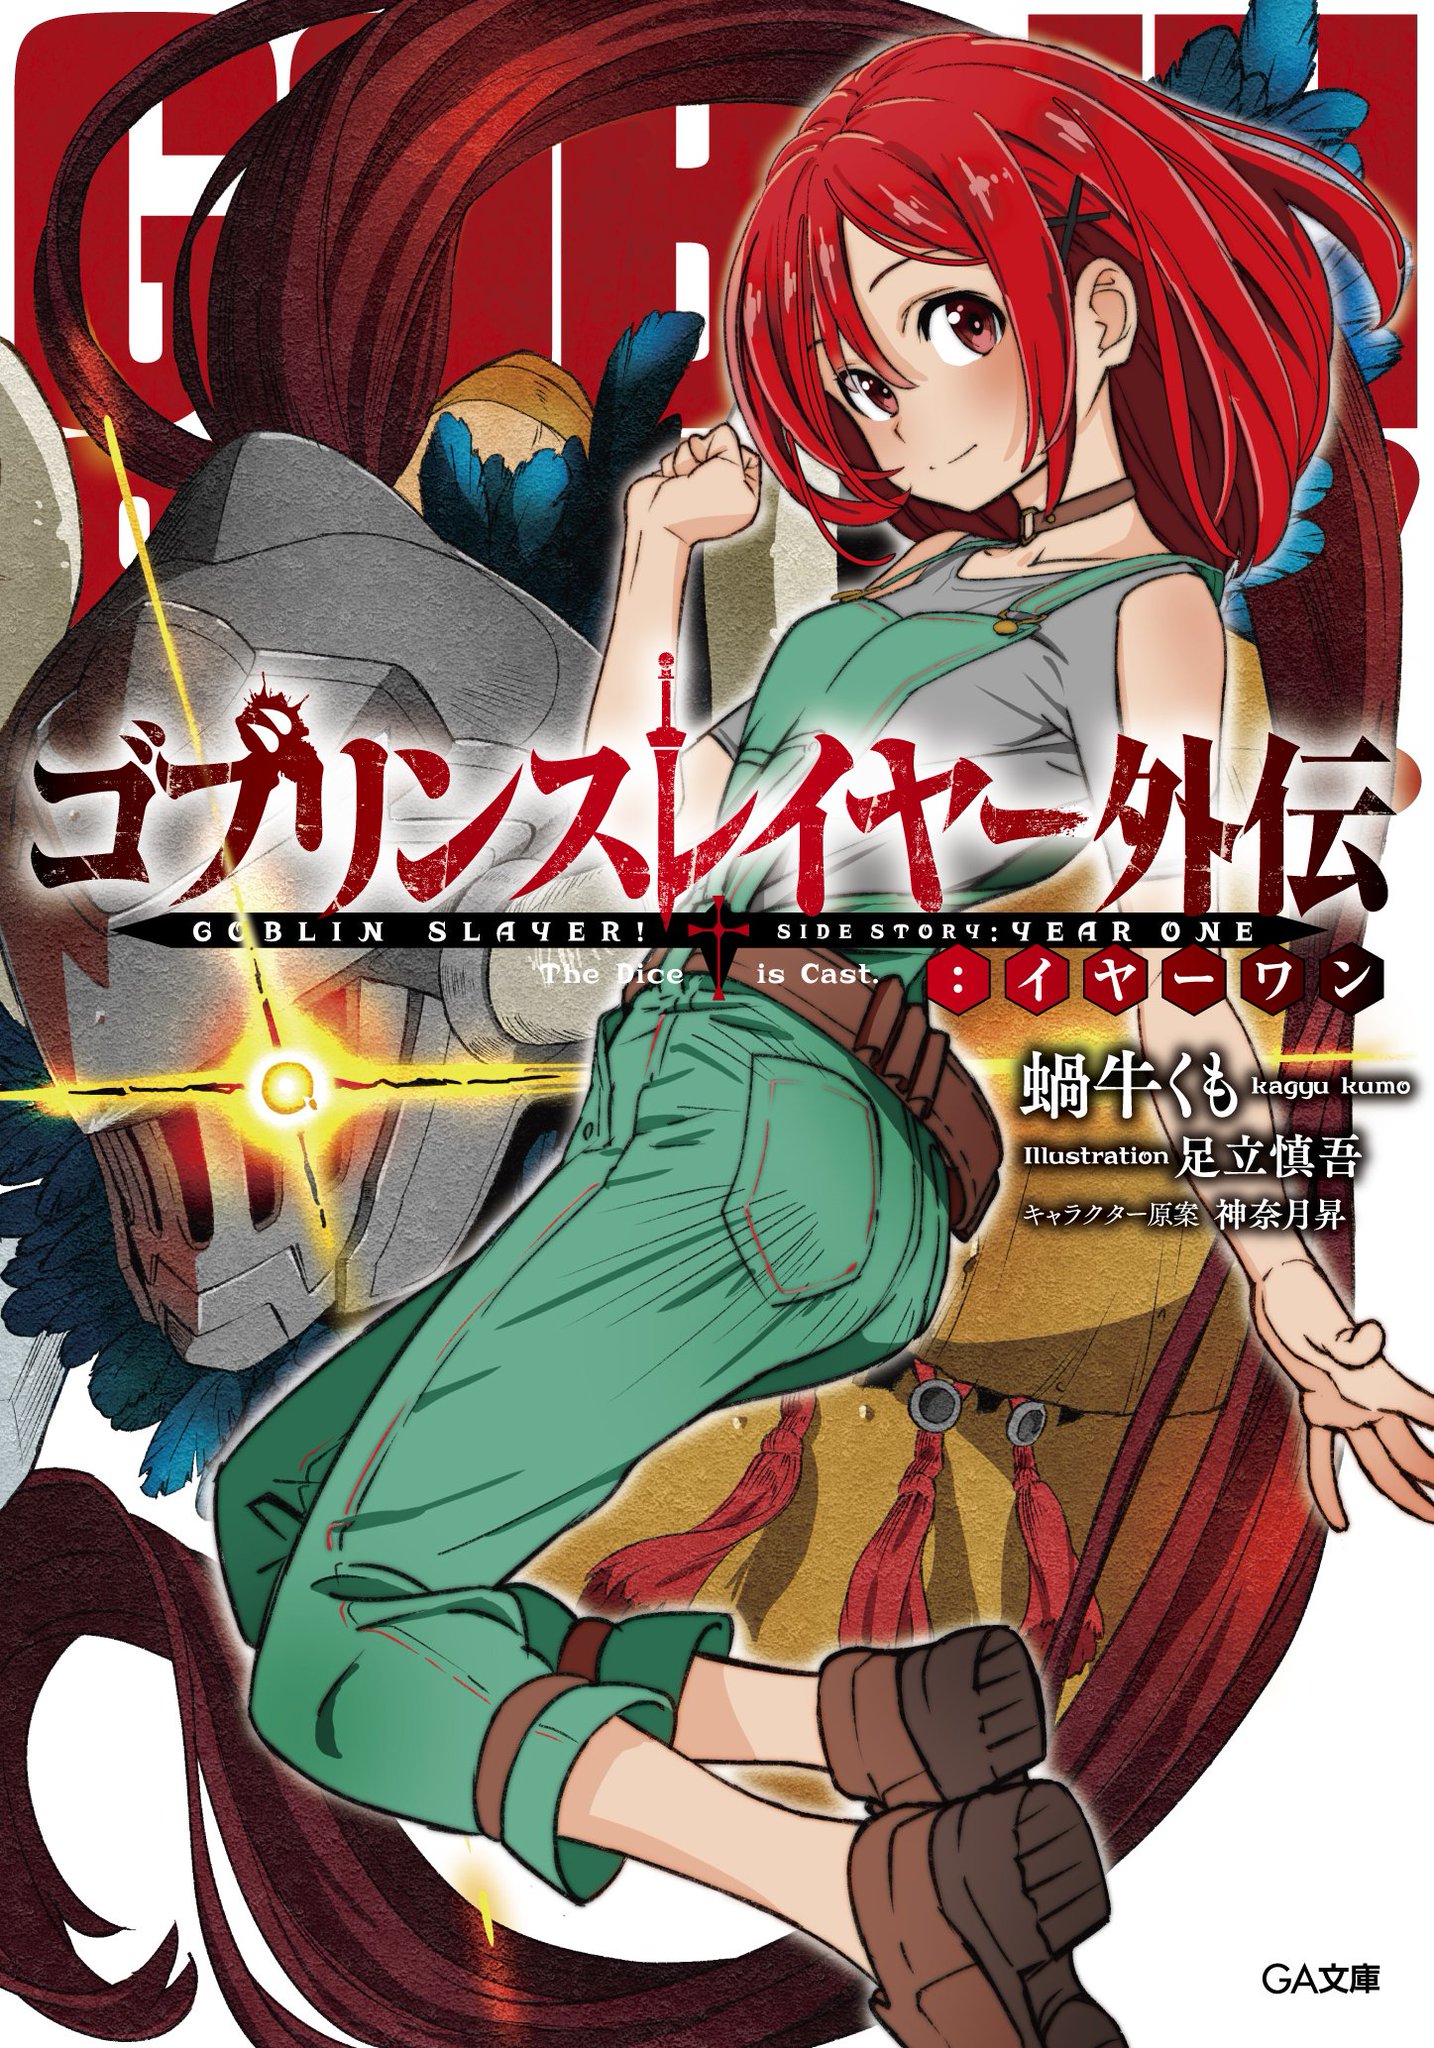 Year One Light Novel Volume 1 | Goblin Slayer Wiki | Fandom